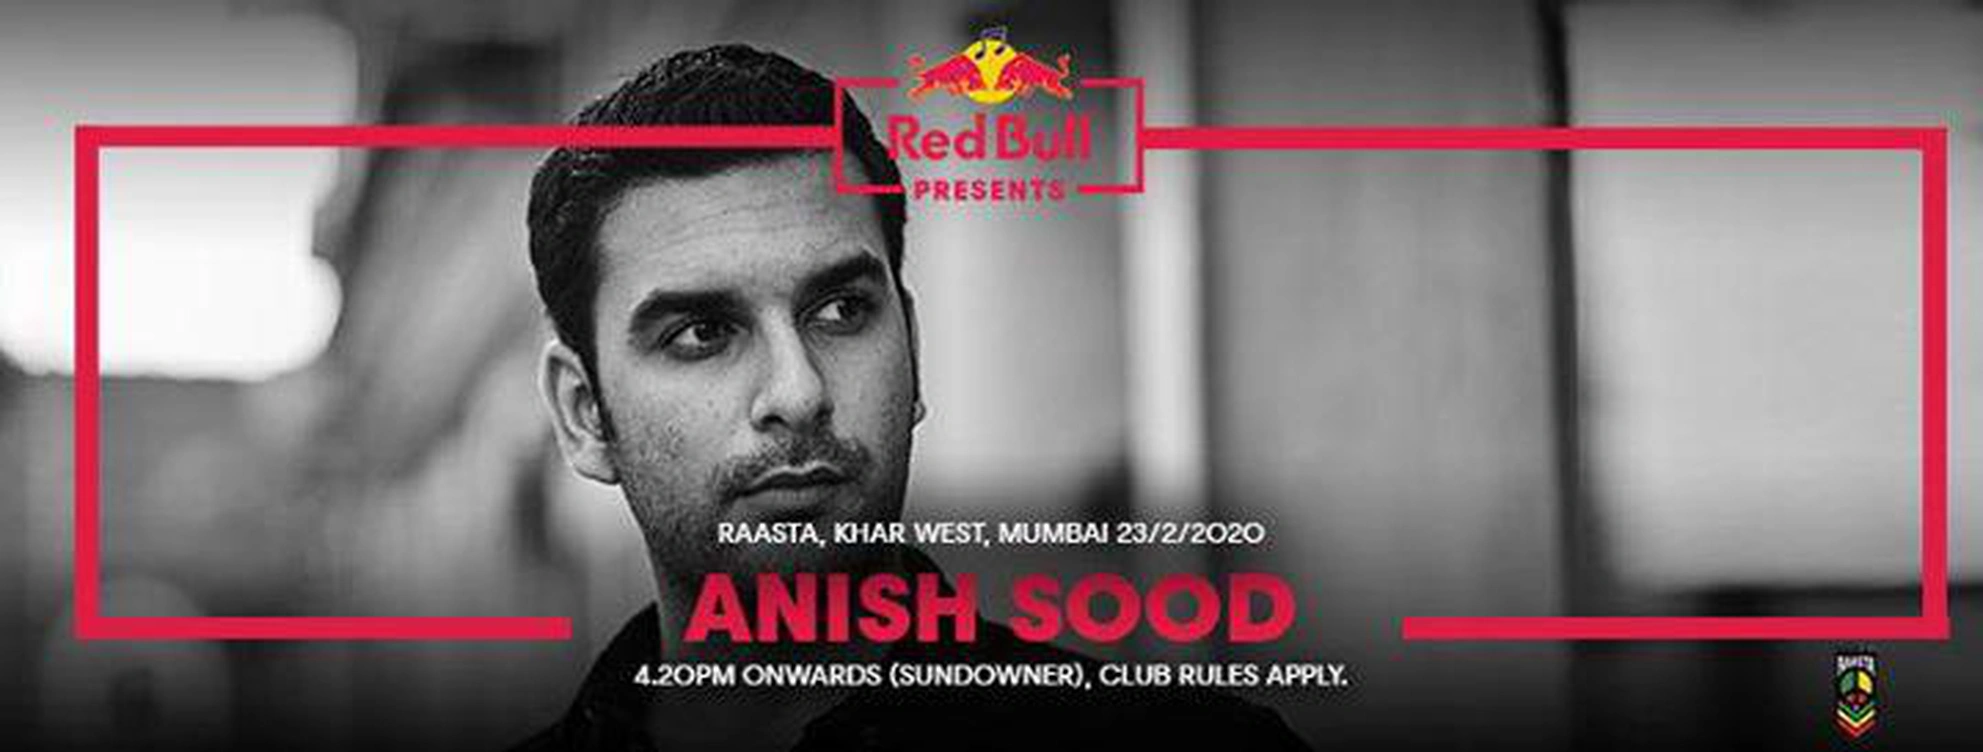 Red Bull Presents Anish Sood